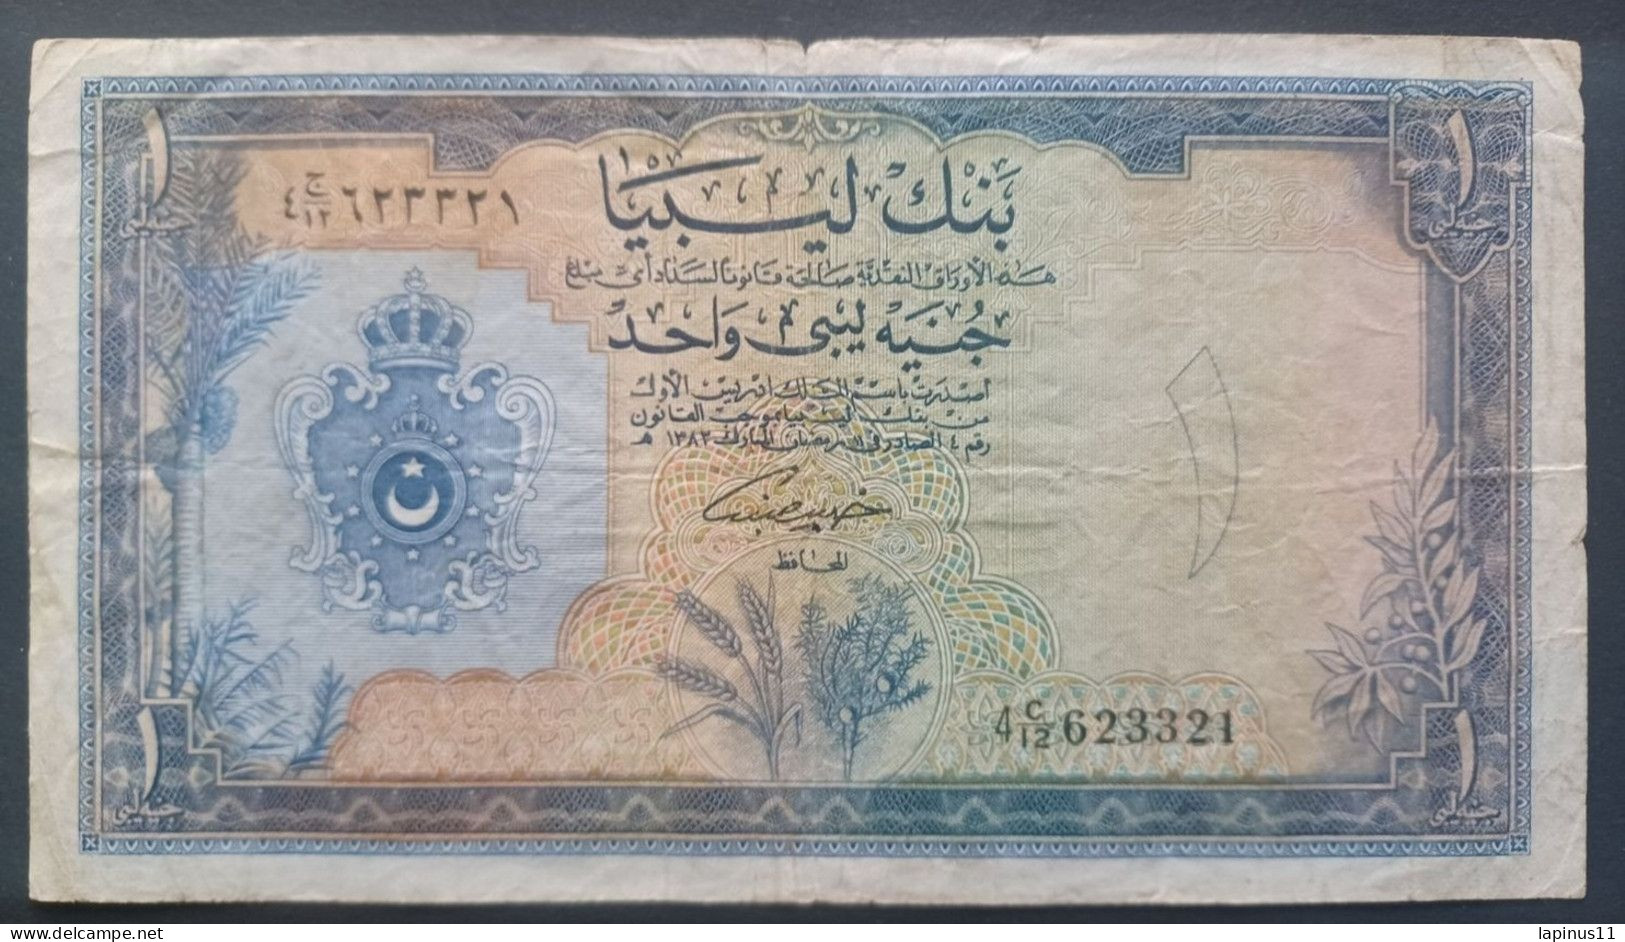 BANKNOTE LIBYA LIBIA 1 POUND 1963 VERY RARE CIRCULATED - Libya